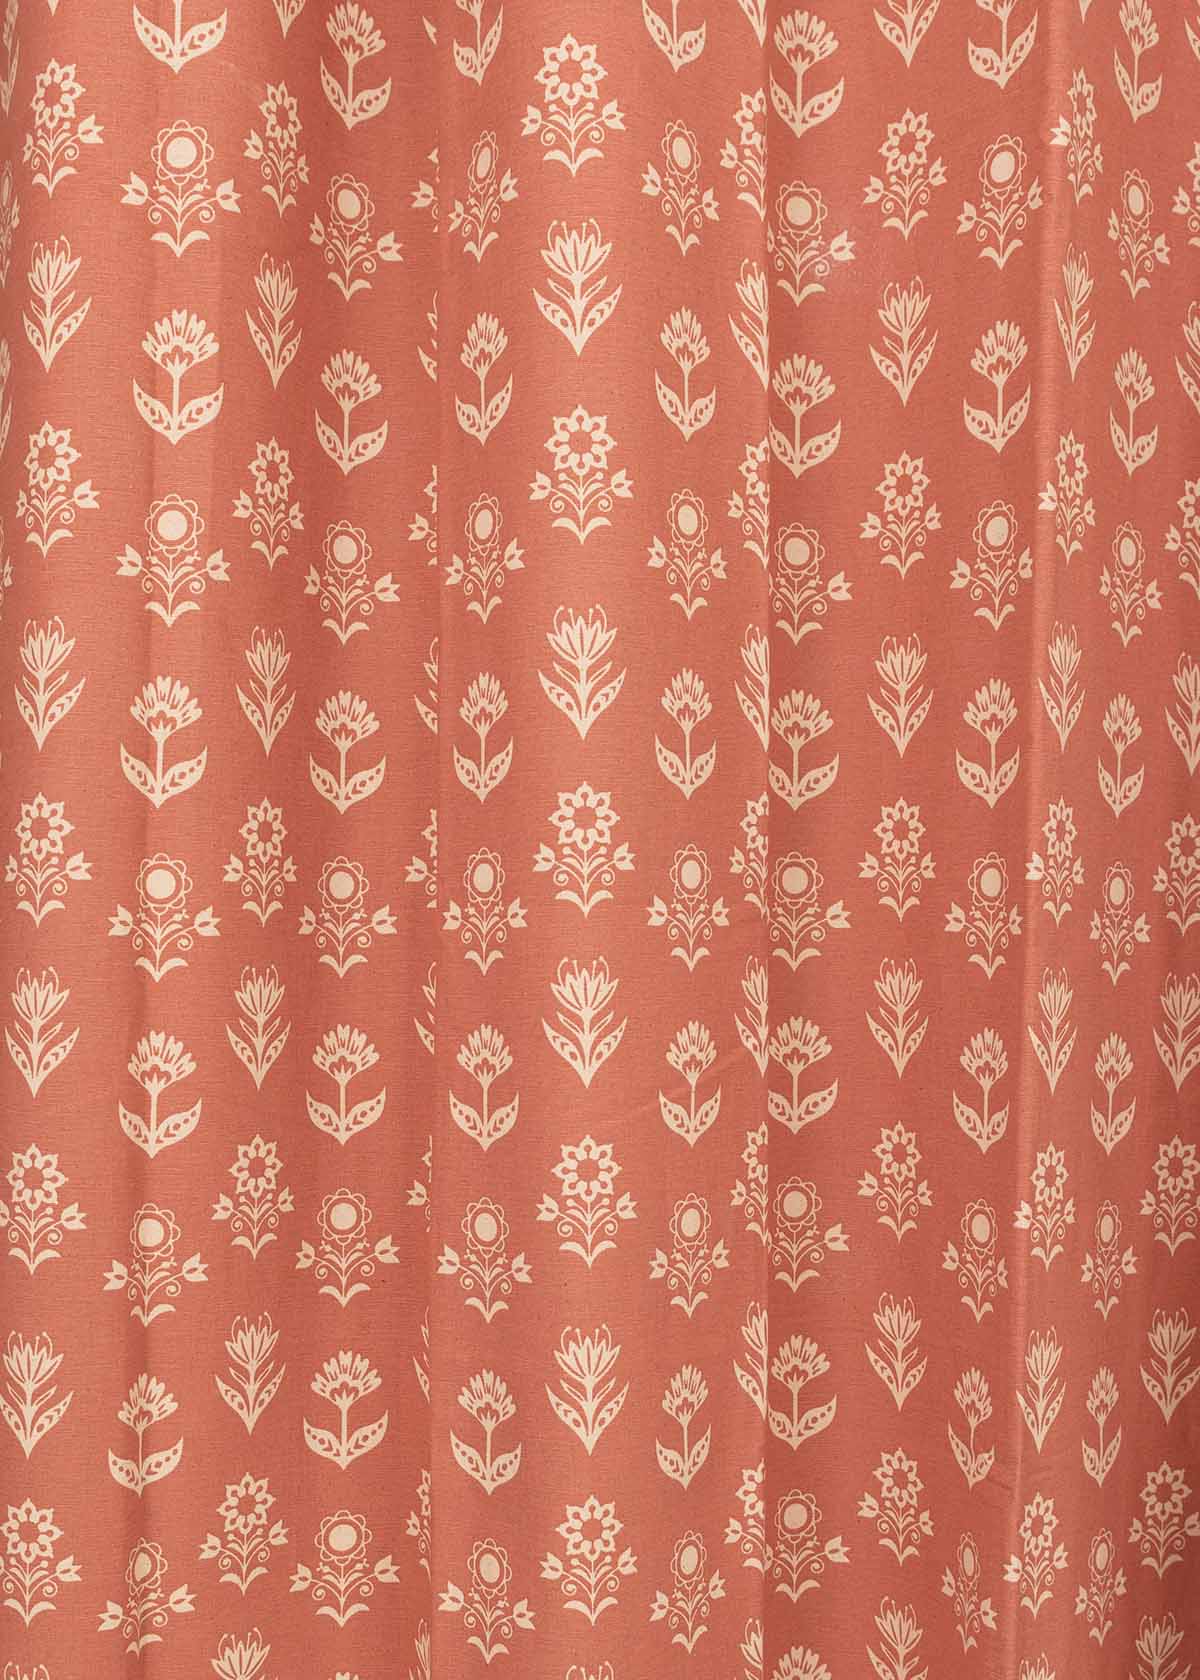 Dahlia 100% Customizable Cotton floral curtain for living room - Room darkening - Rust